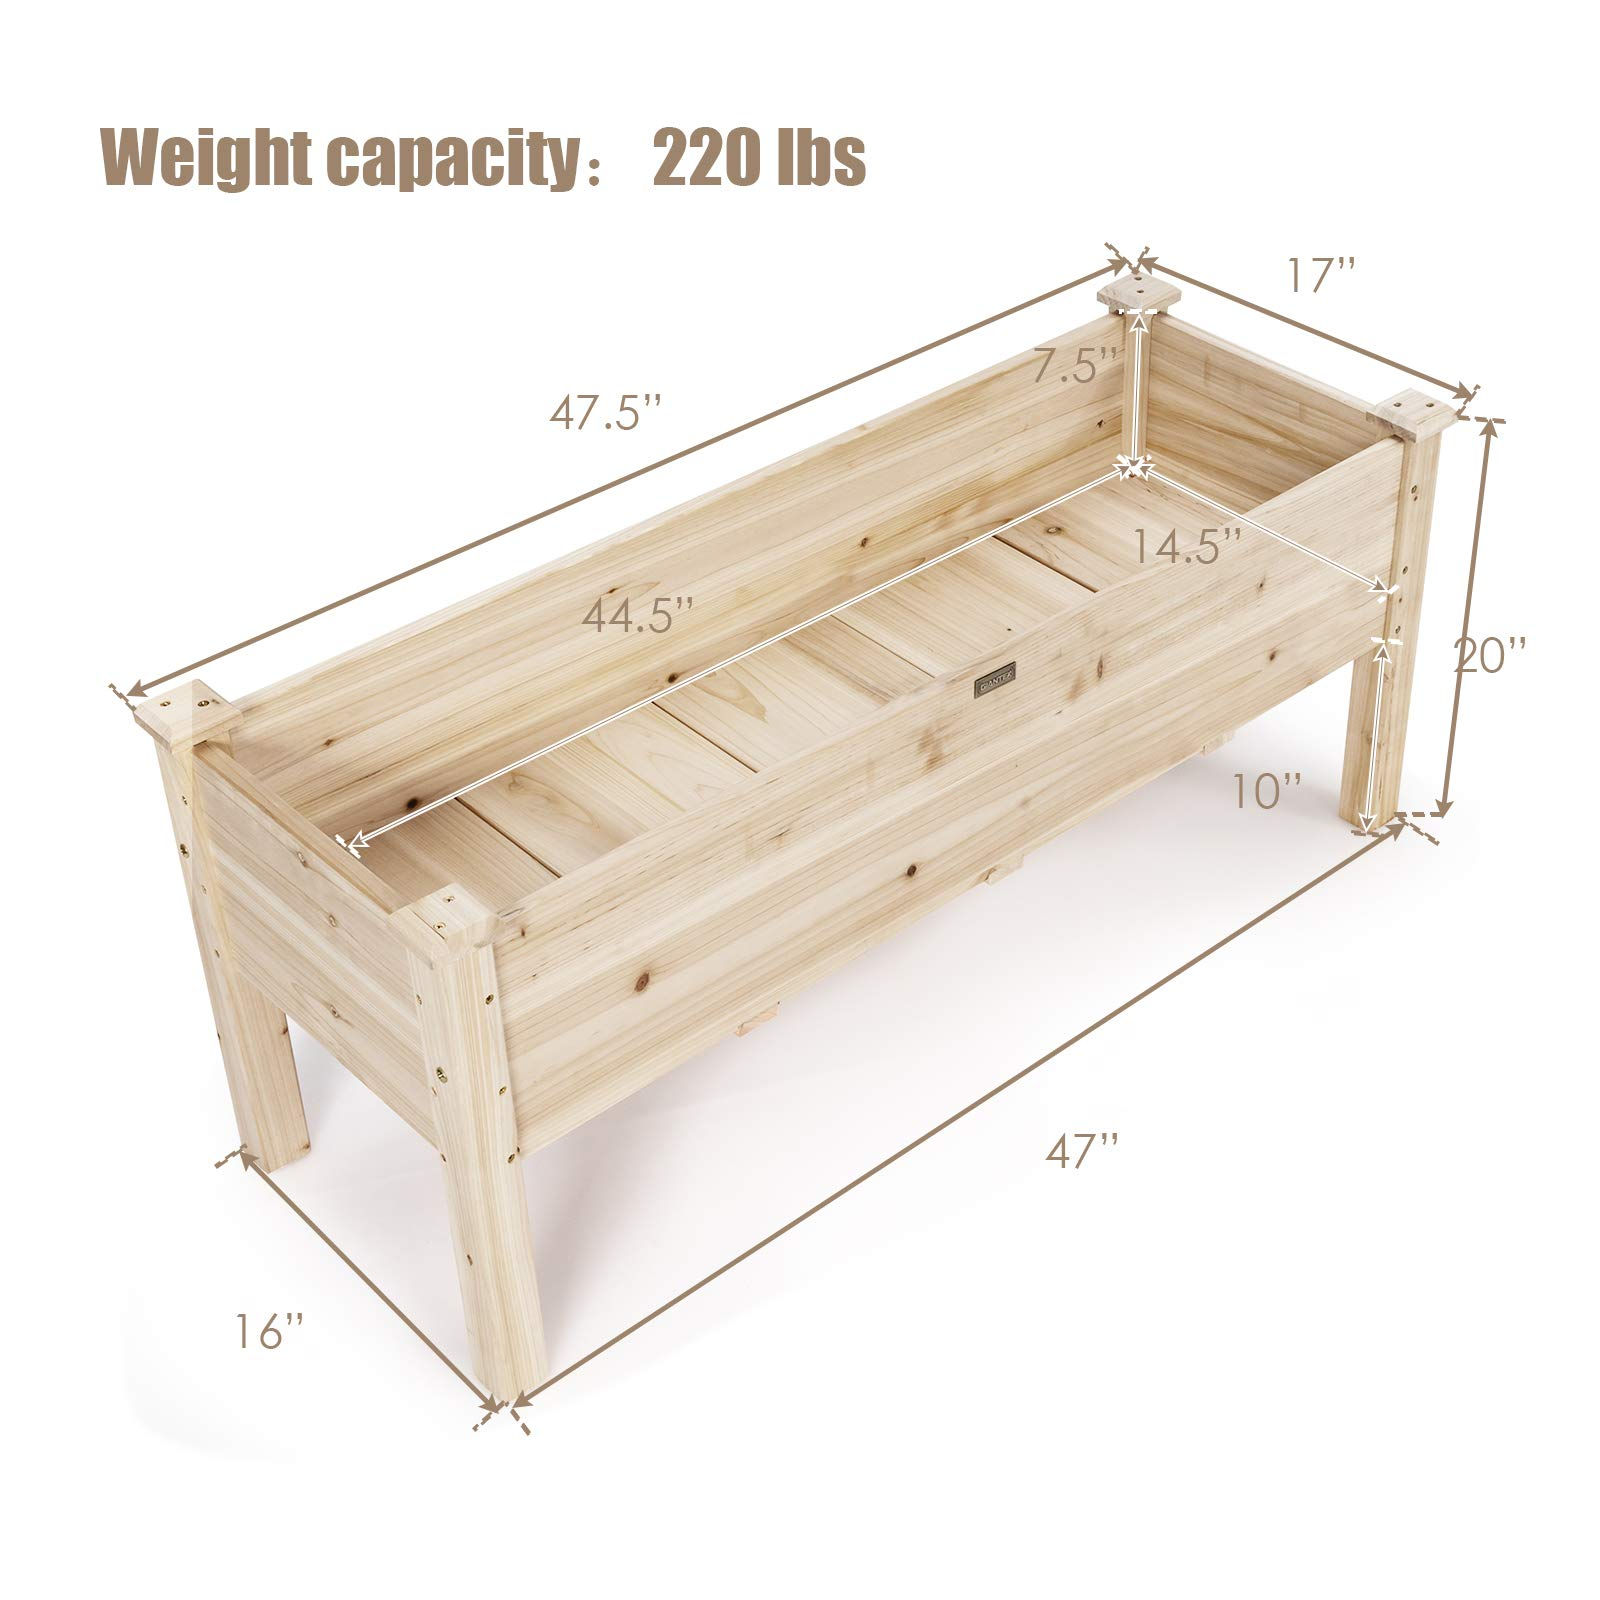 Wood Planter Box with Legs, 47.5"L x 17"W x 20"H